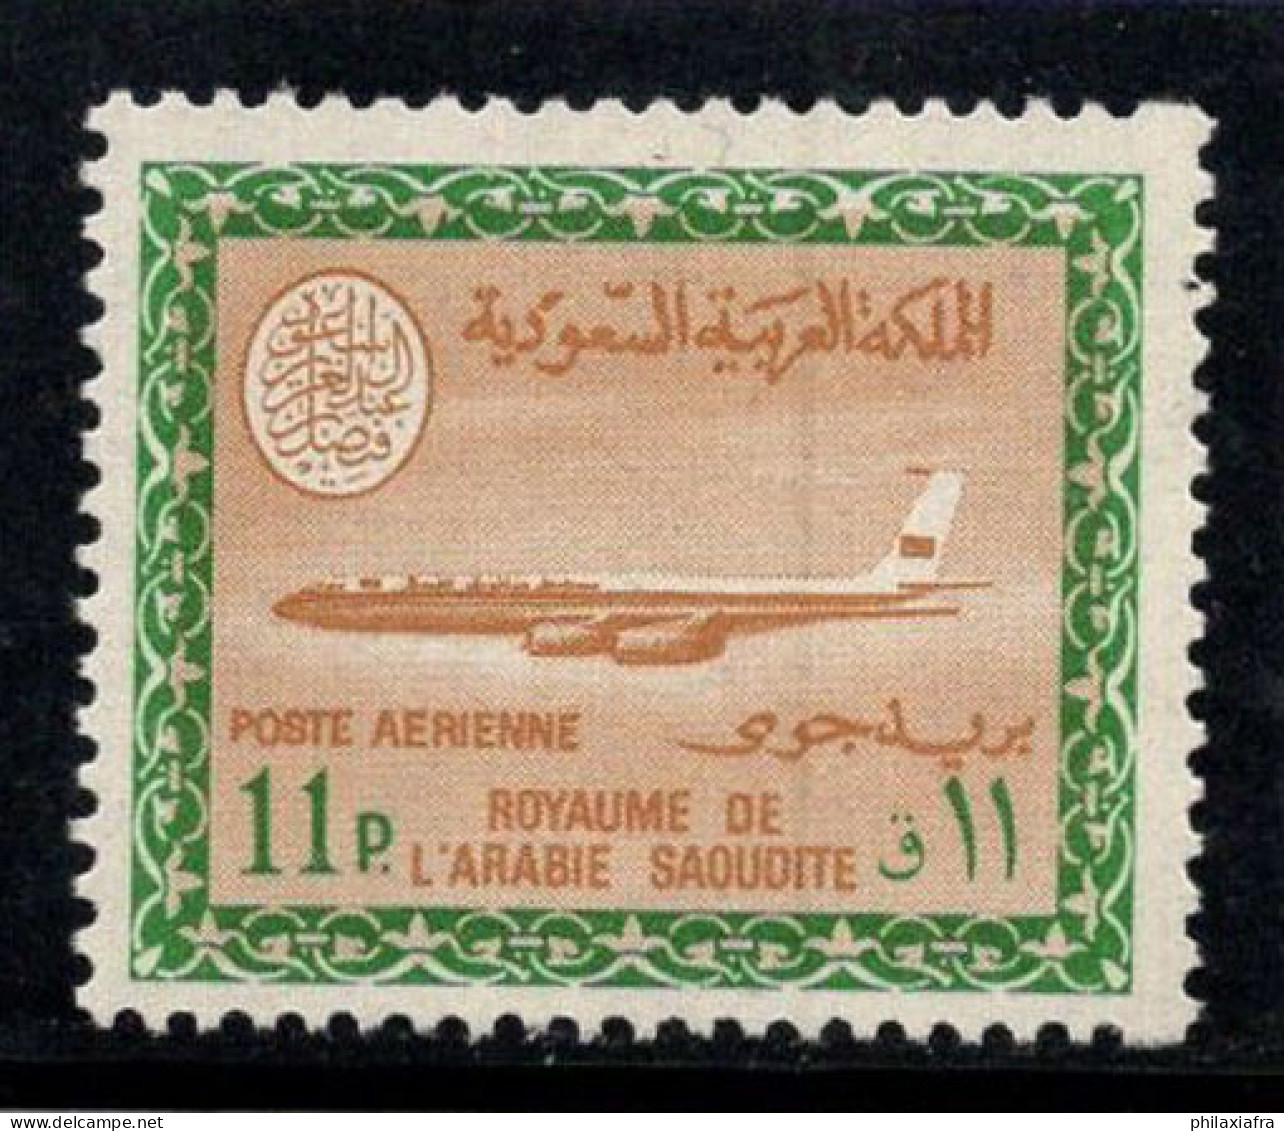 Arabie Saoudite 1966-75 Mi. 365 Y Neuf ** 100% Poste Aérienne 11 Pia, Boeing 720 B - Arabie Saoudite